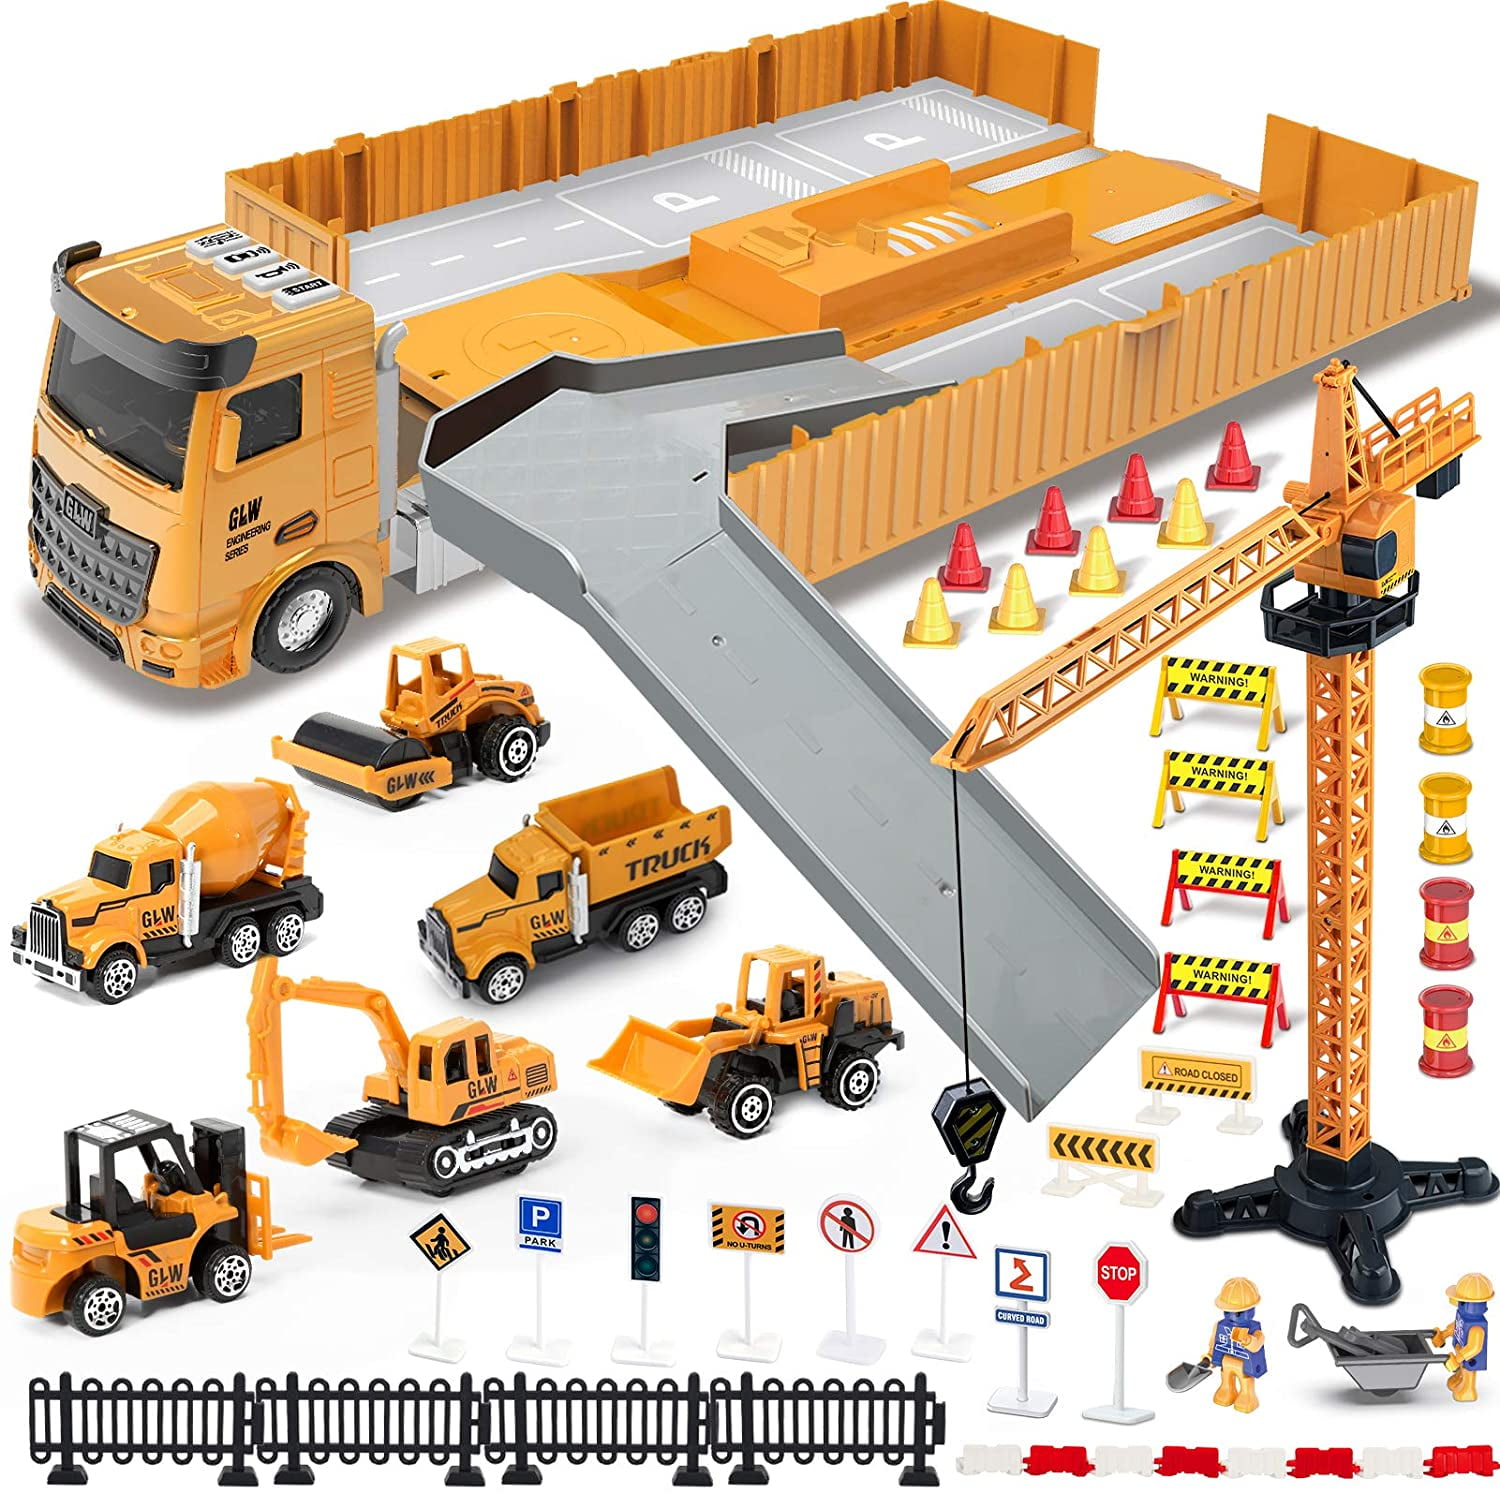 Construction Backpack Kids Portable Toy Set Building Crane 2 Trucks Best Gift 